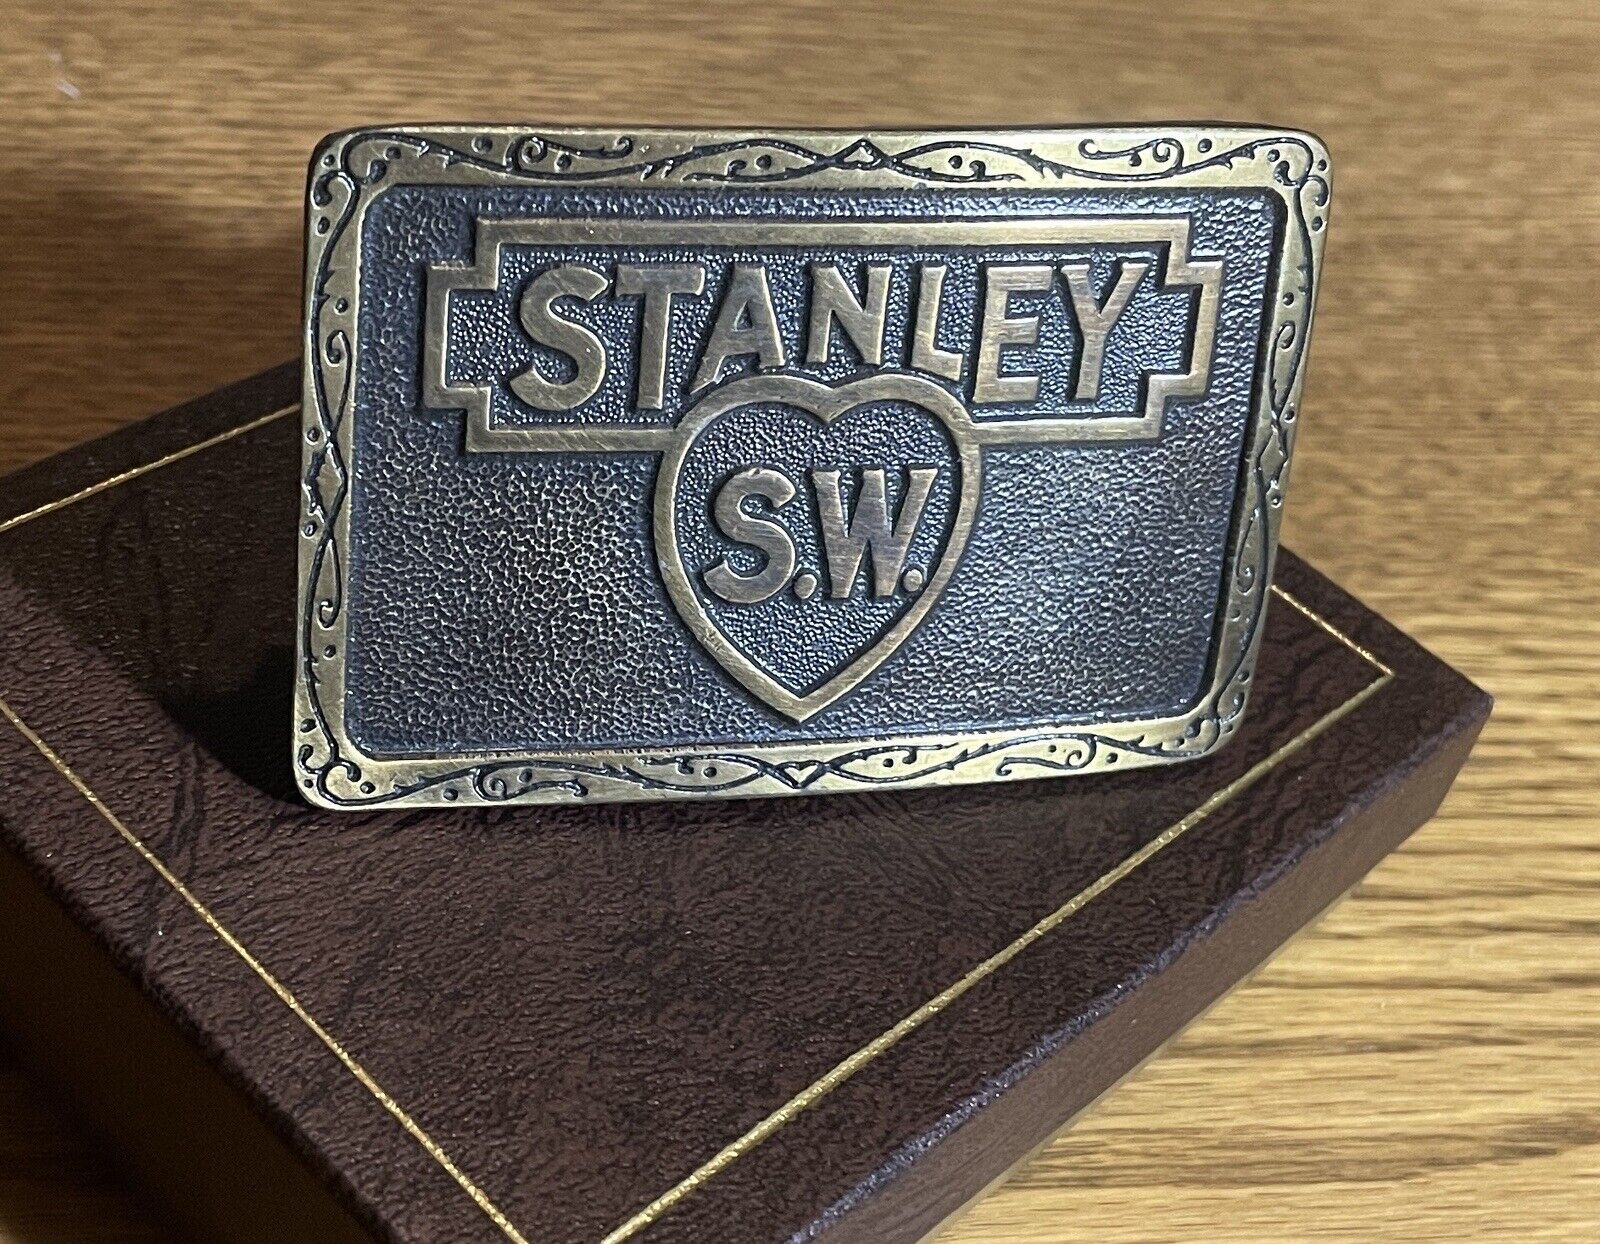 Stanley SW Belt Buckle - Rare